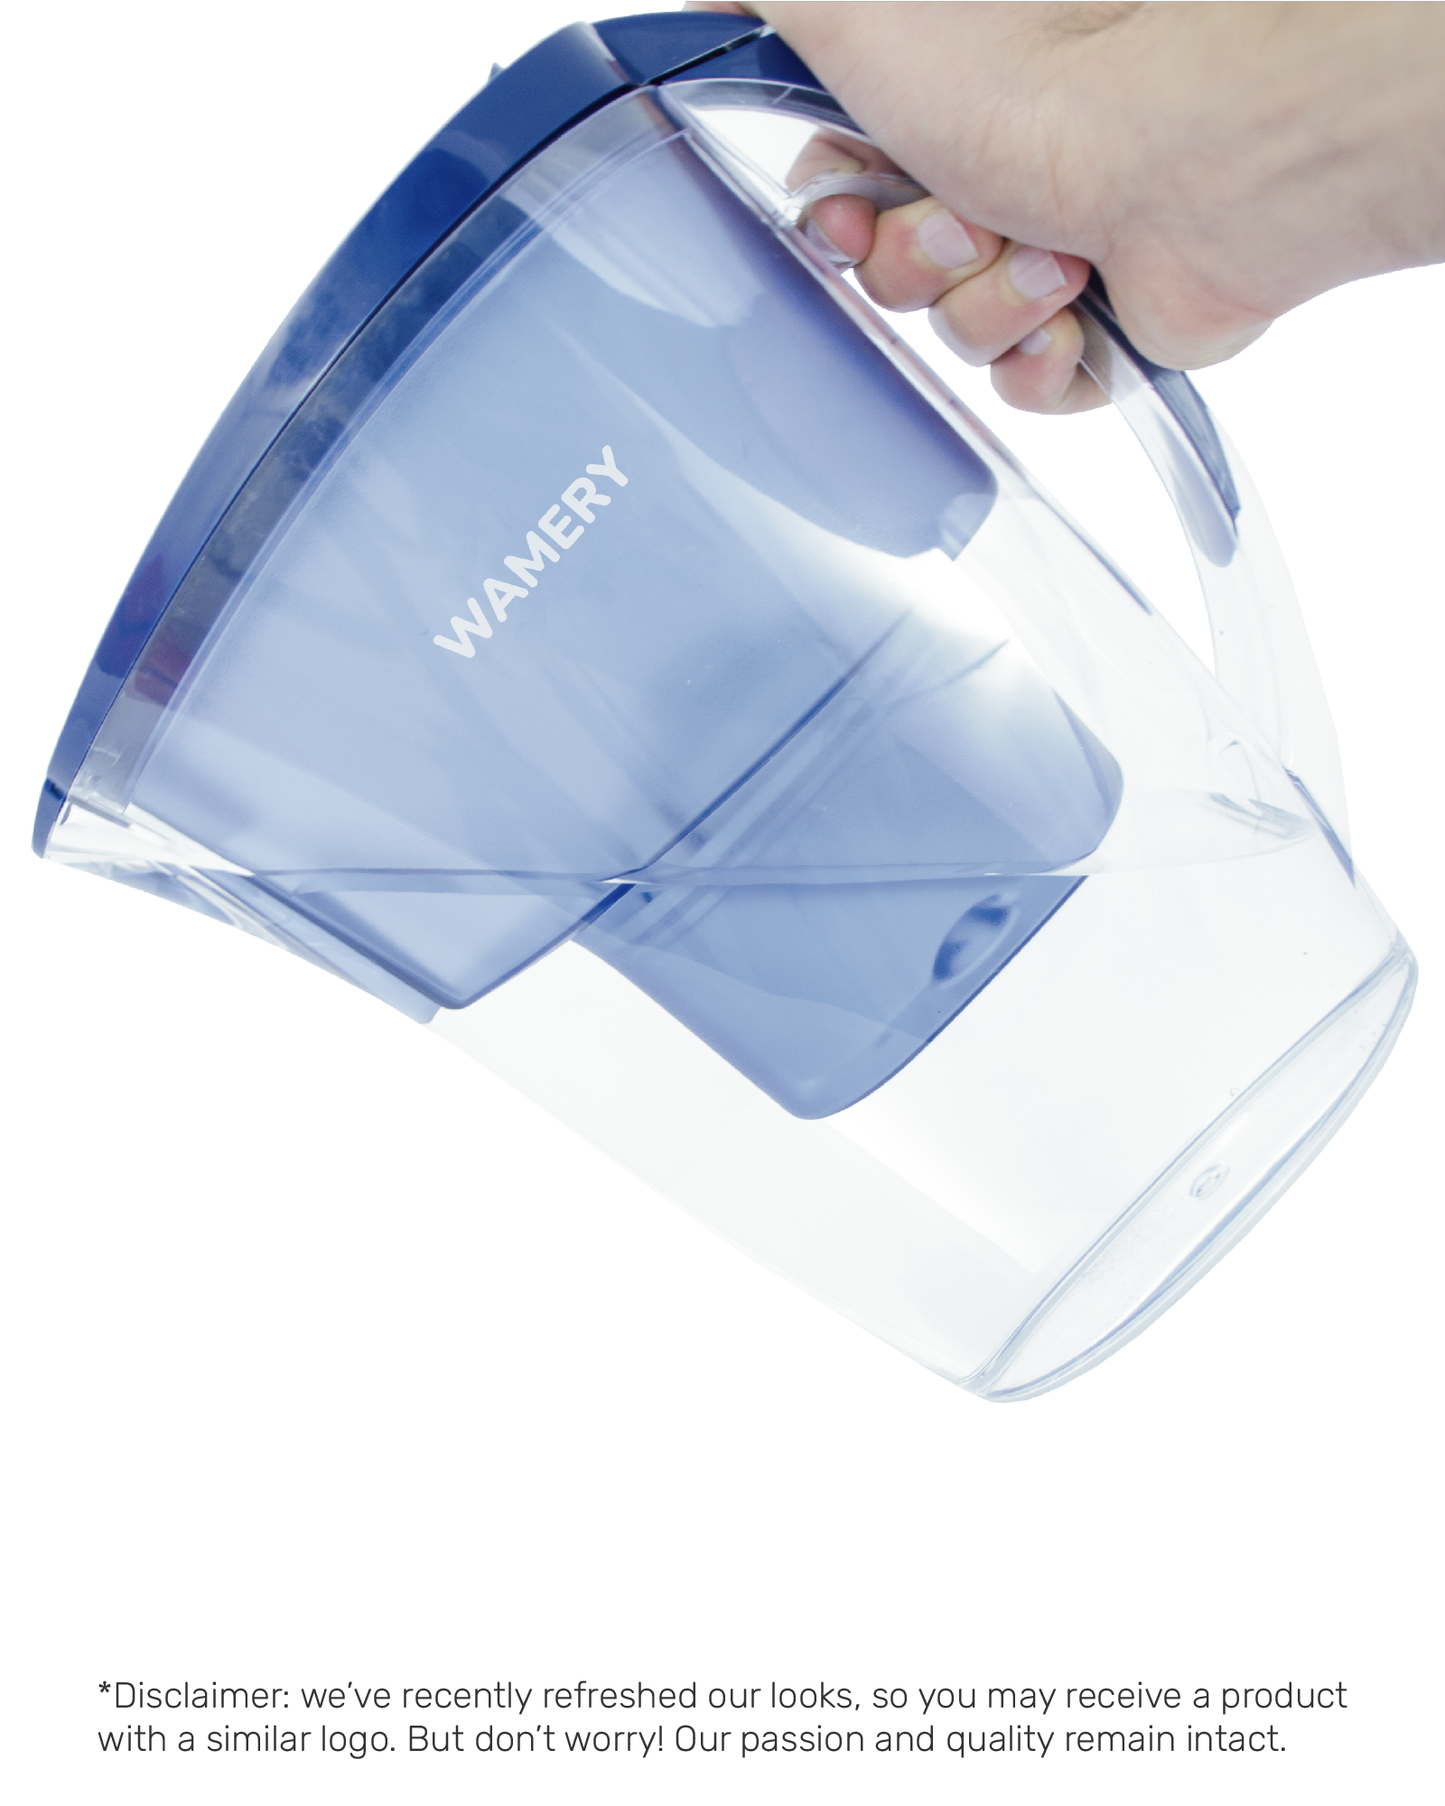 Slim Water Filter Pitcher 1.5 Liters + FREE Filter